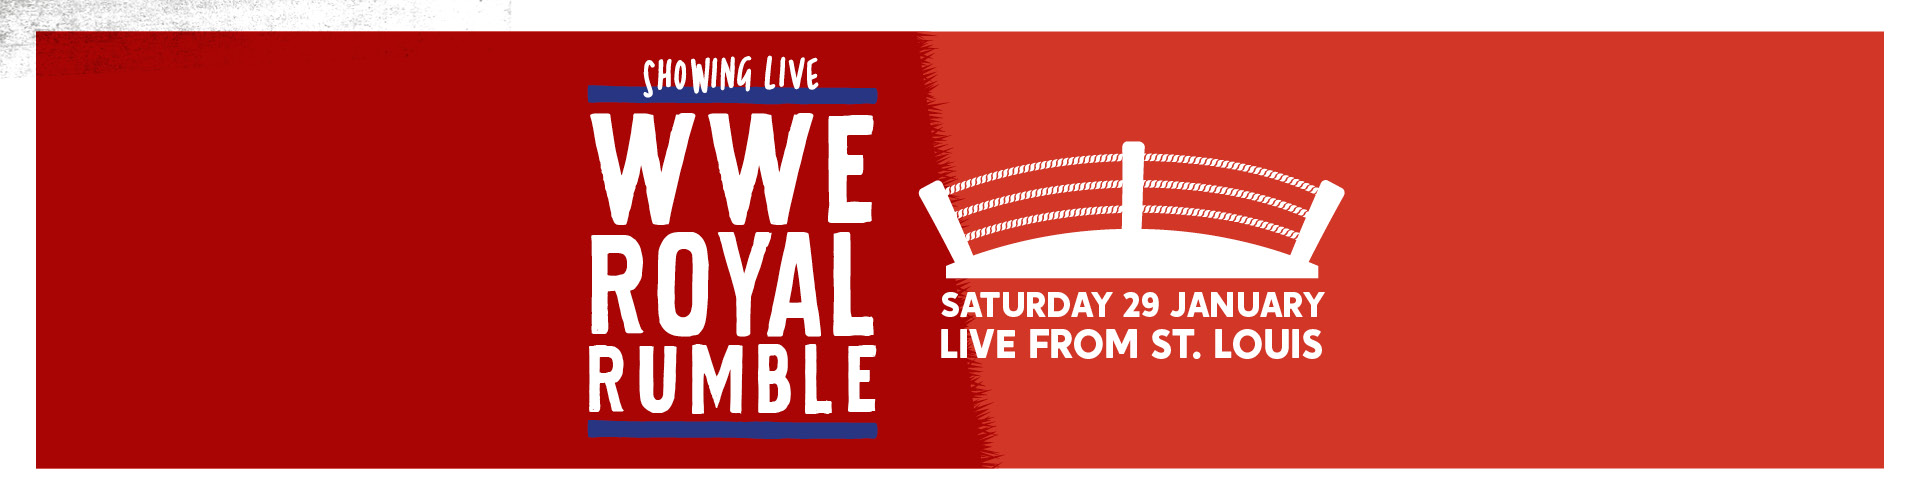 Showing Live, WWE Royal Rumble. Saturday 29 January.